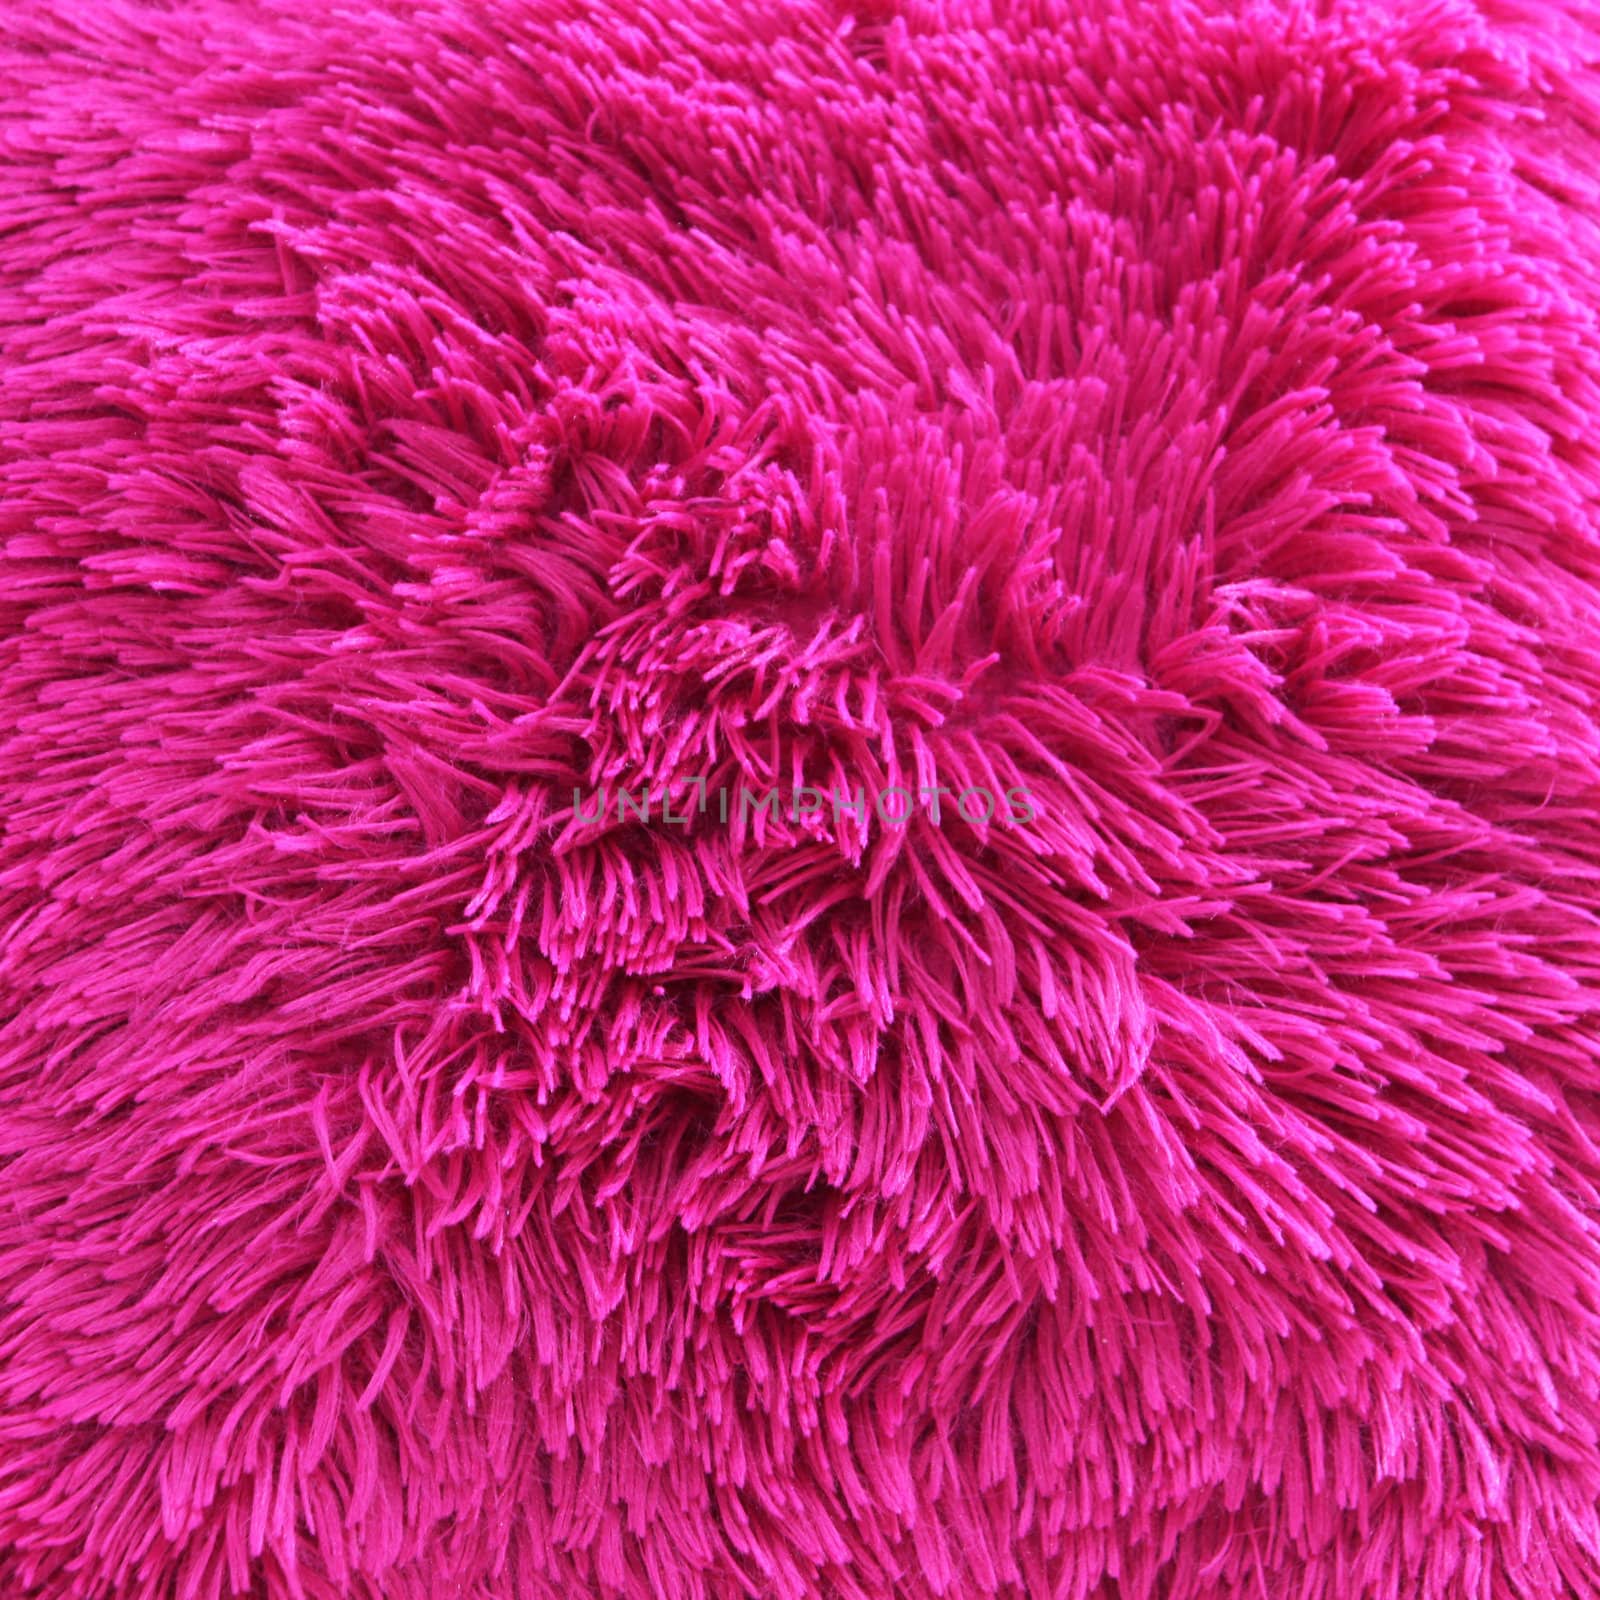 Background texture of long soft vivid pink shaggy carpet pile with fibre detail